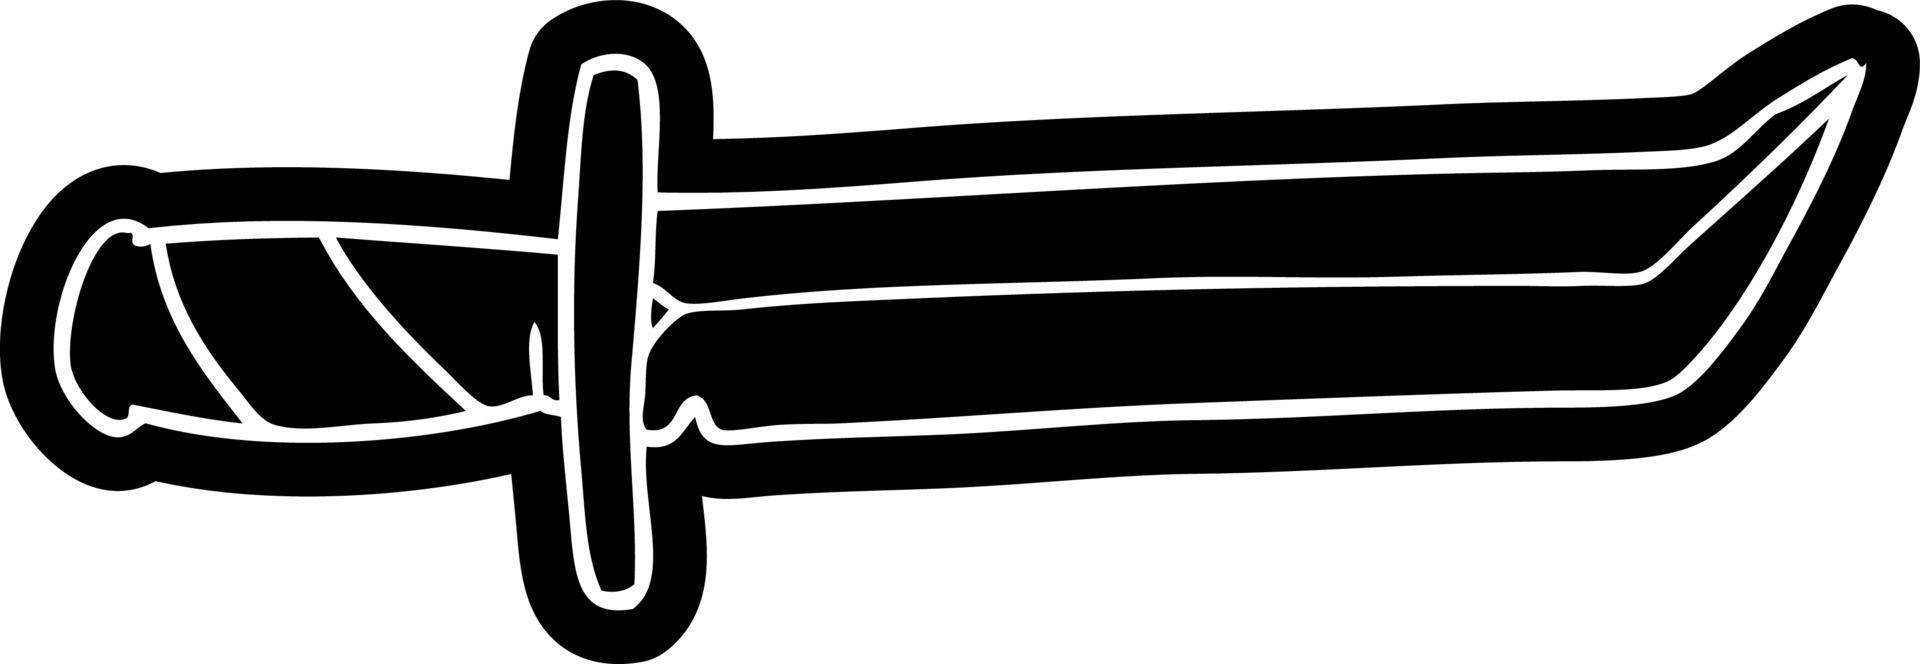 cartoon icon drawing of a short dagger vector